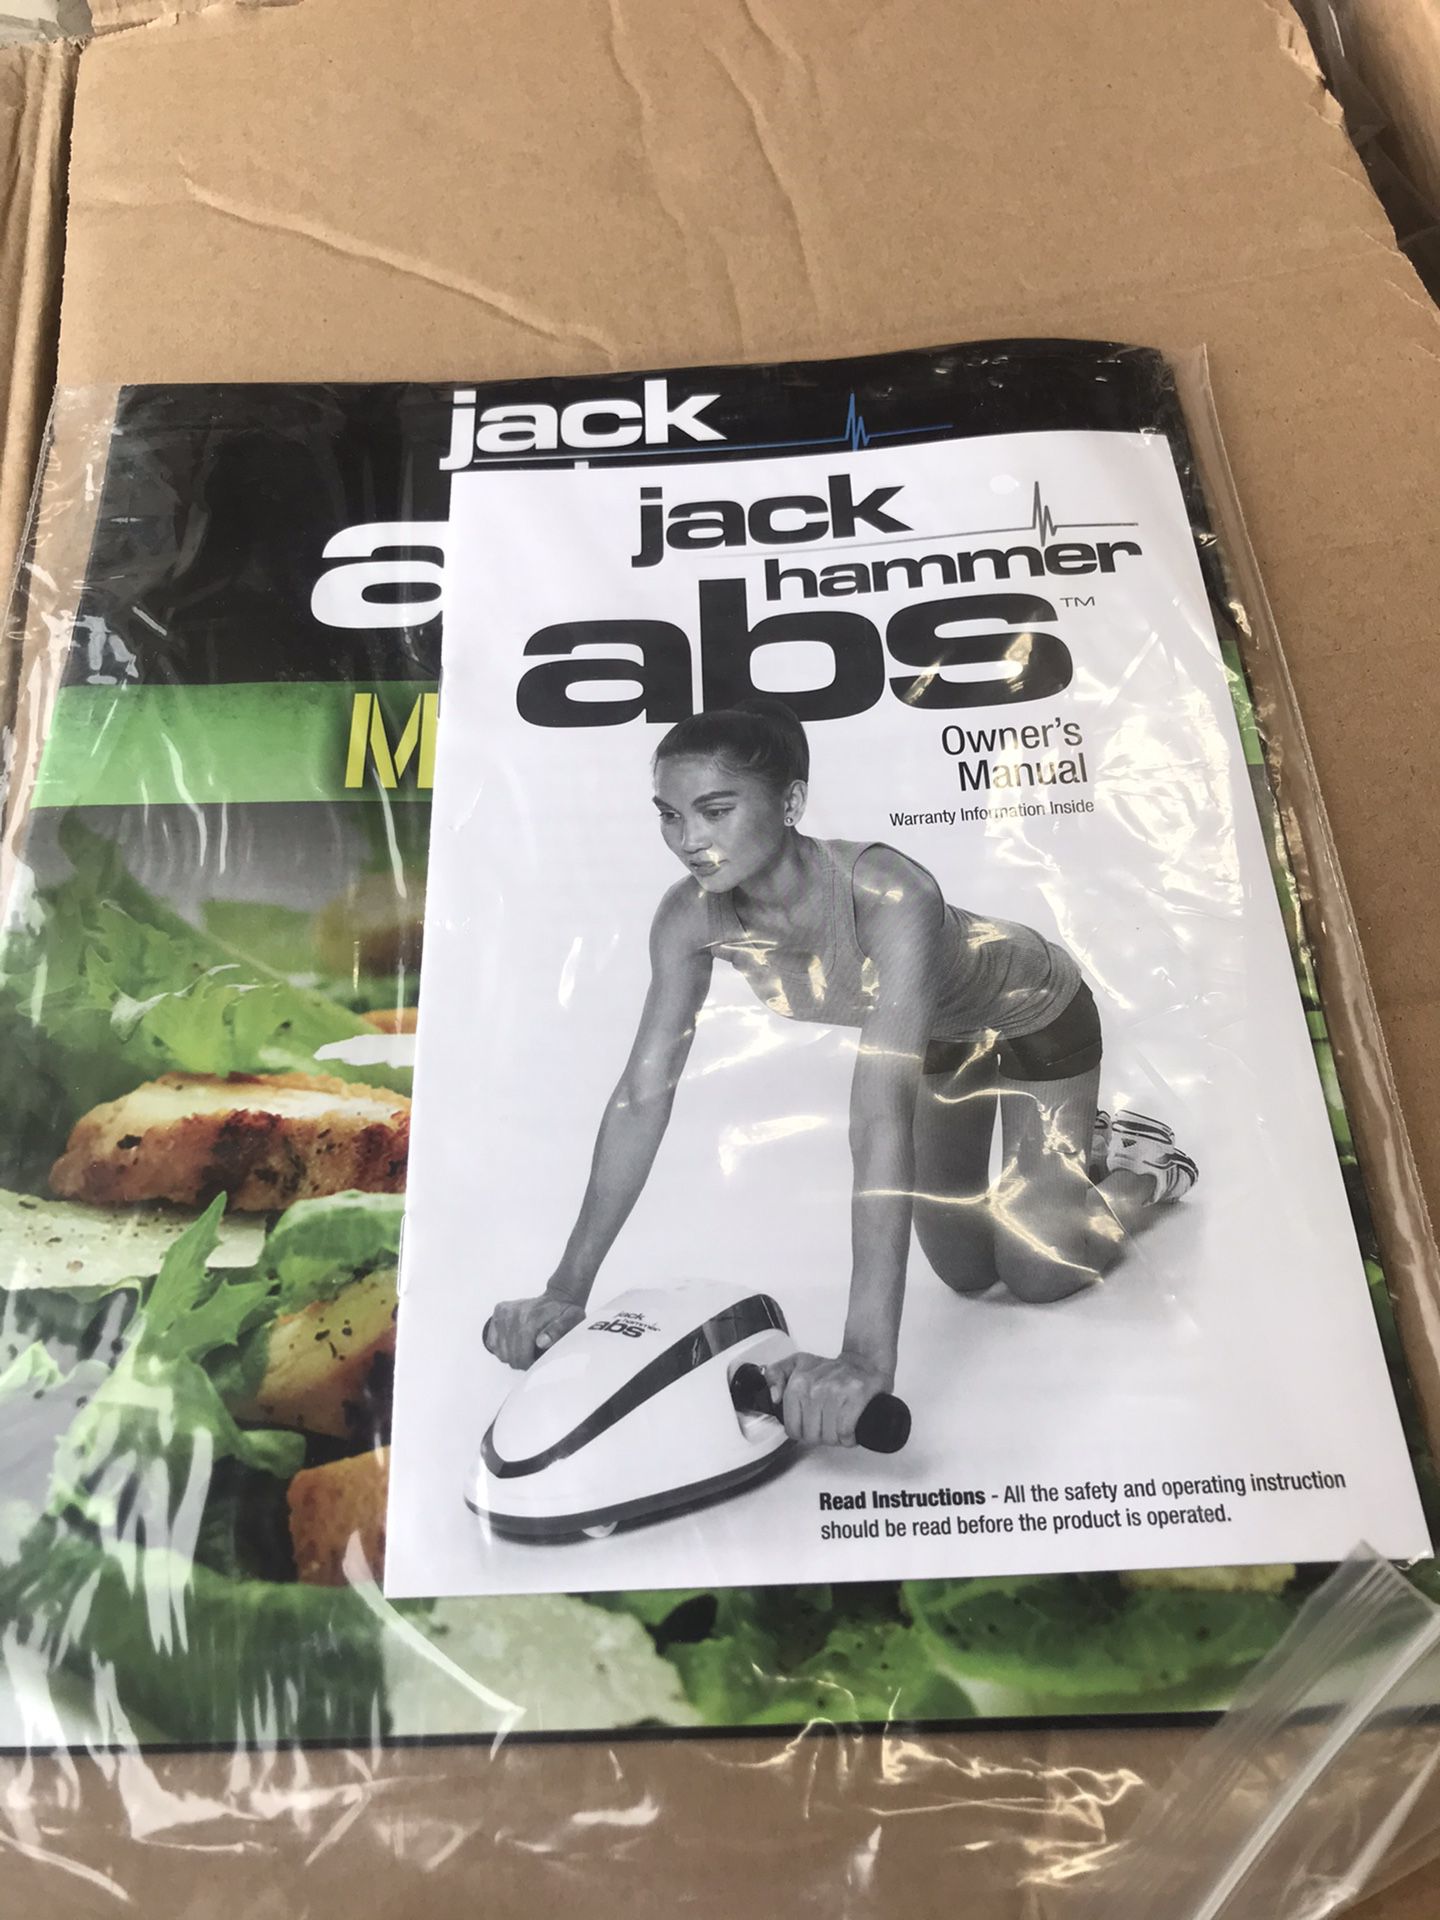 Jack hammer abs